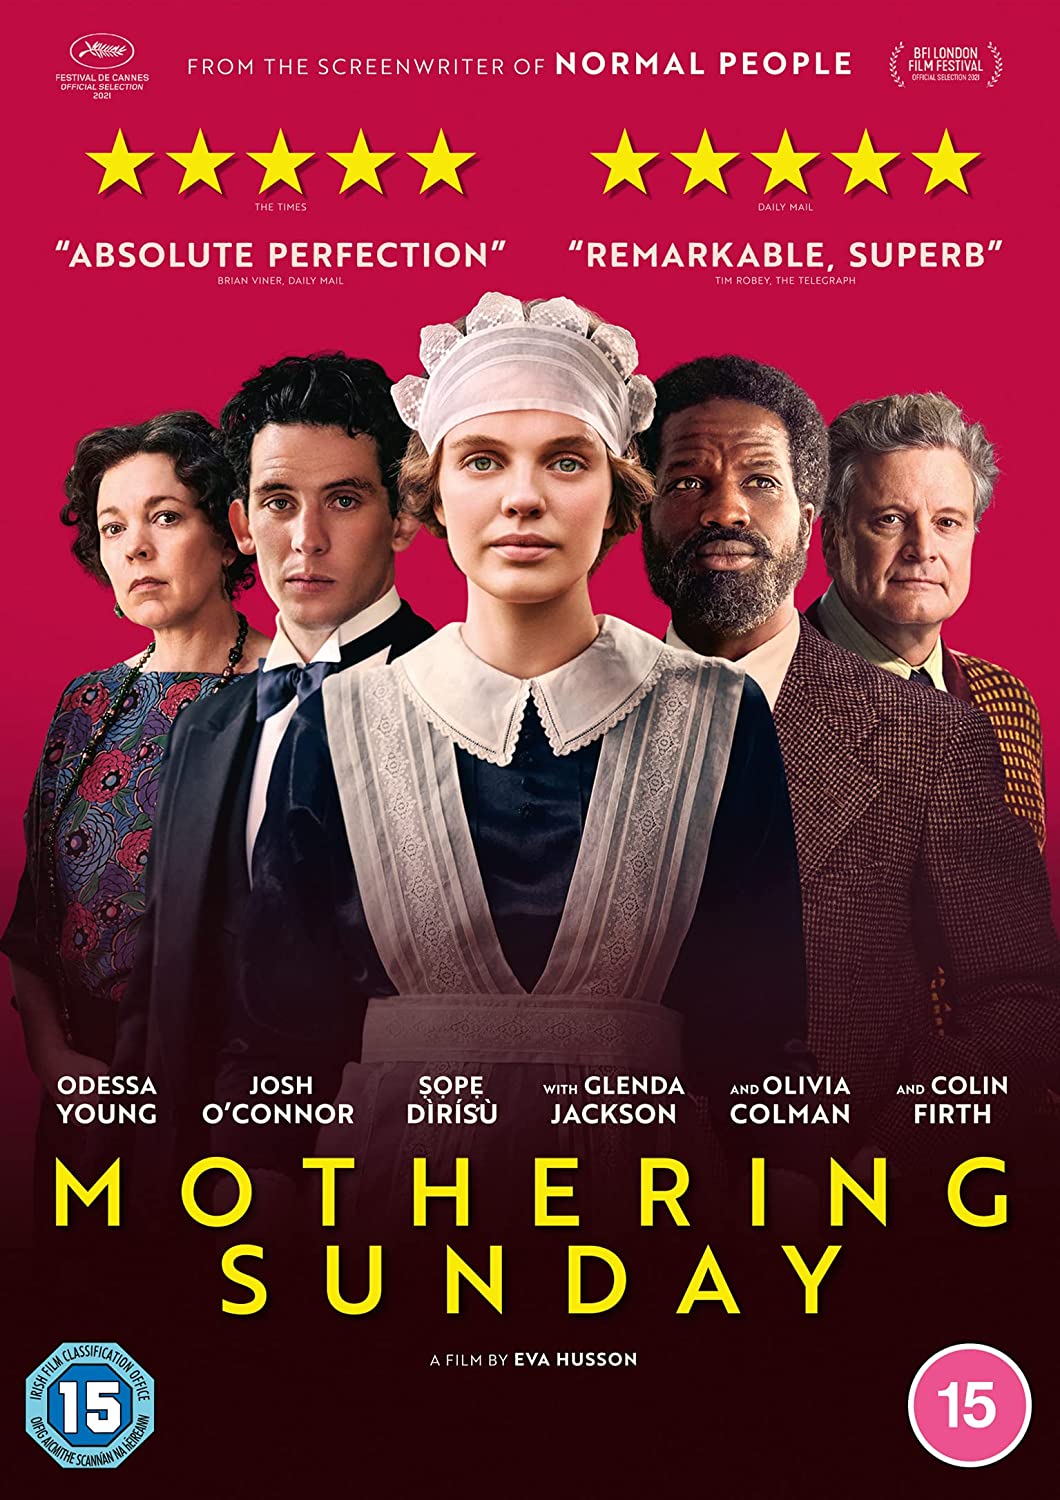 Mothering Sunday [2021] - Romance/Drama [DVD]